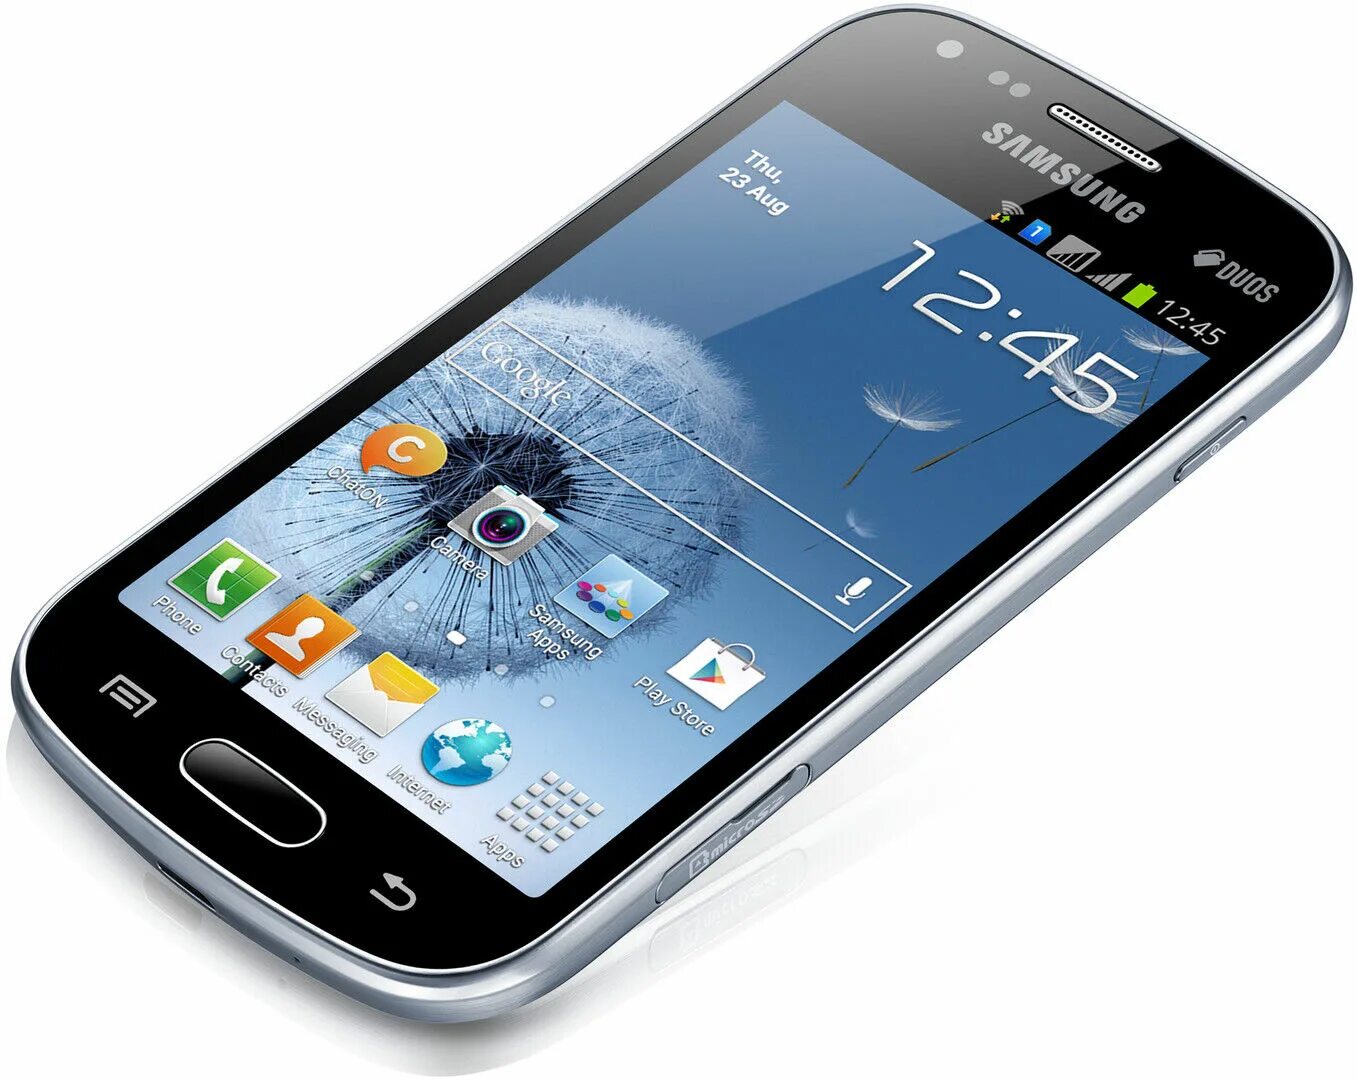 Samsung Galaxy s7562 Duos. Samsung Galaxy trend gt-s7562. Galaxy s Duos gt-s7562. Samsung Galaxy 7562 Duos.